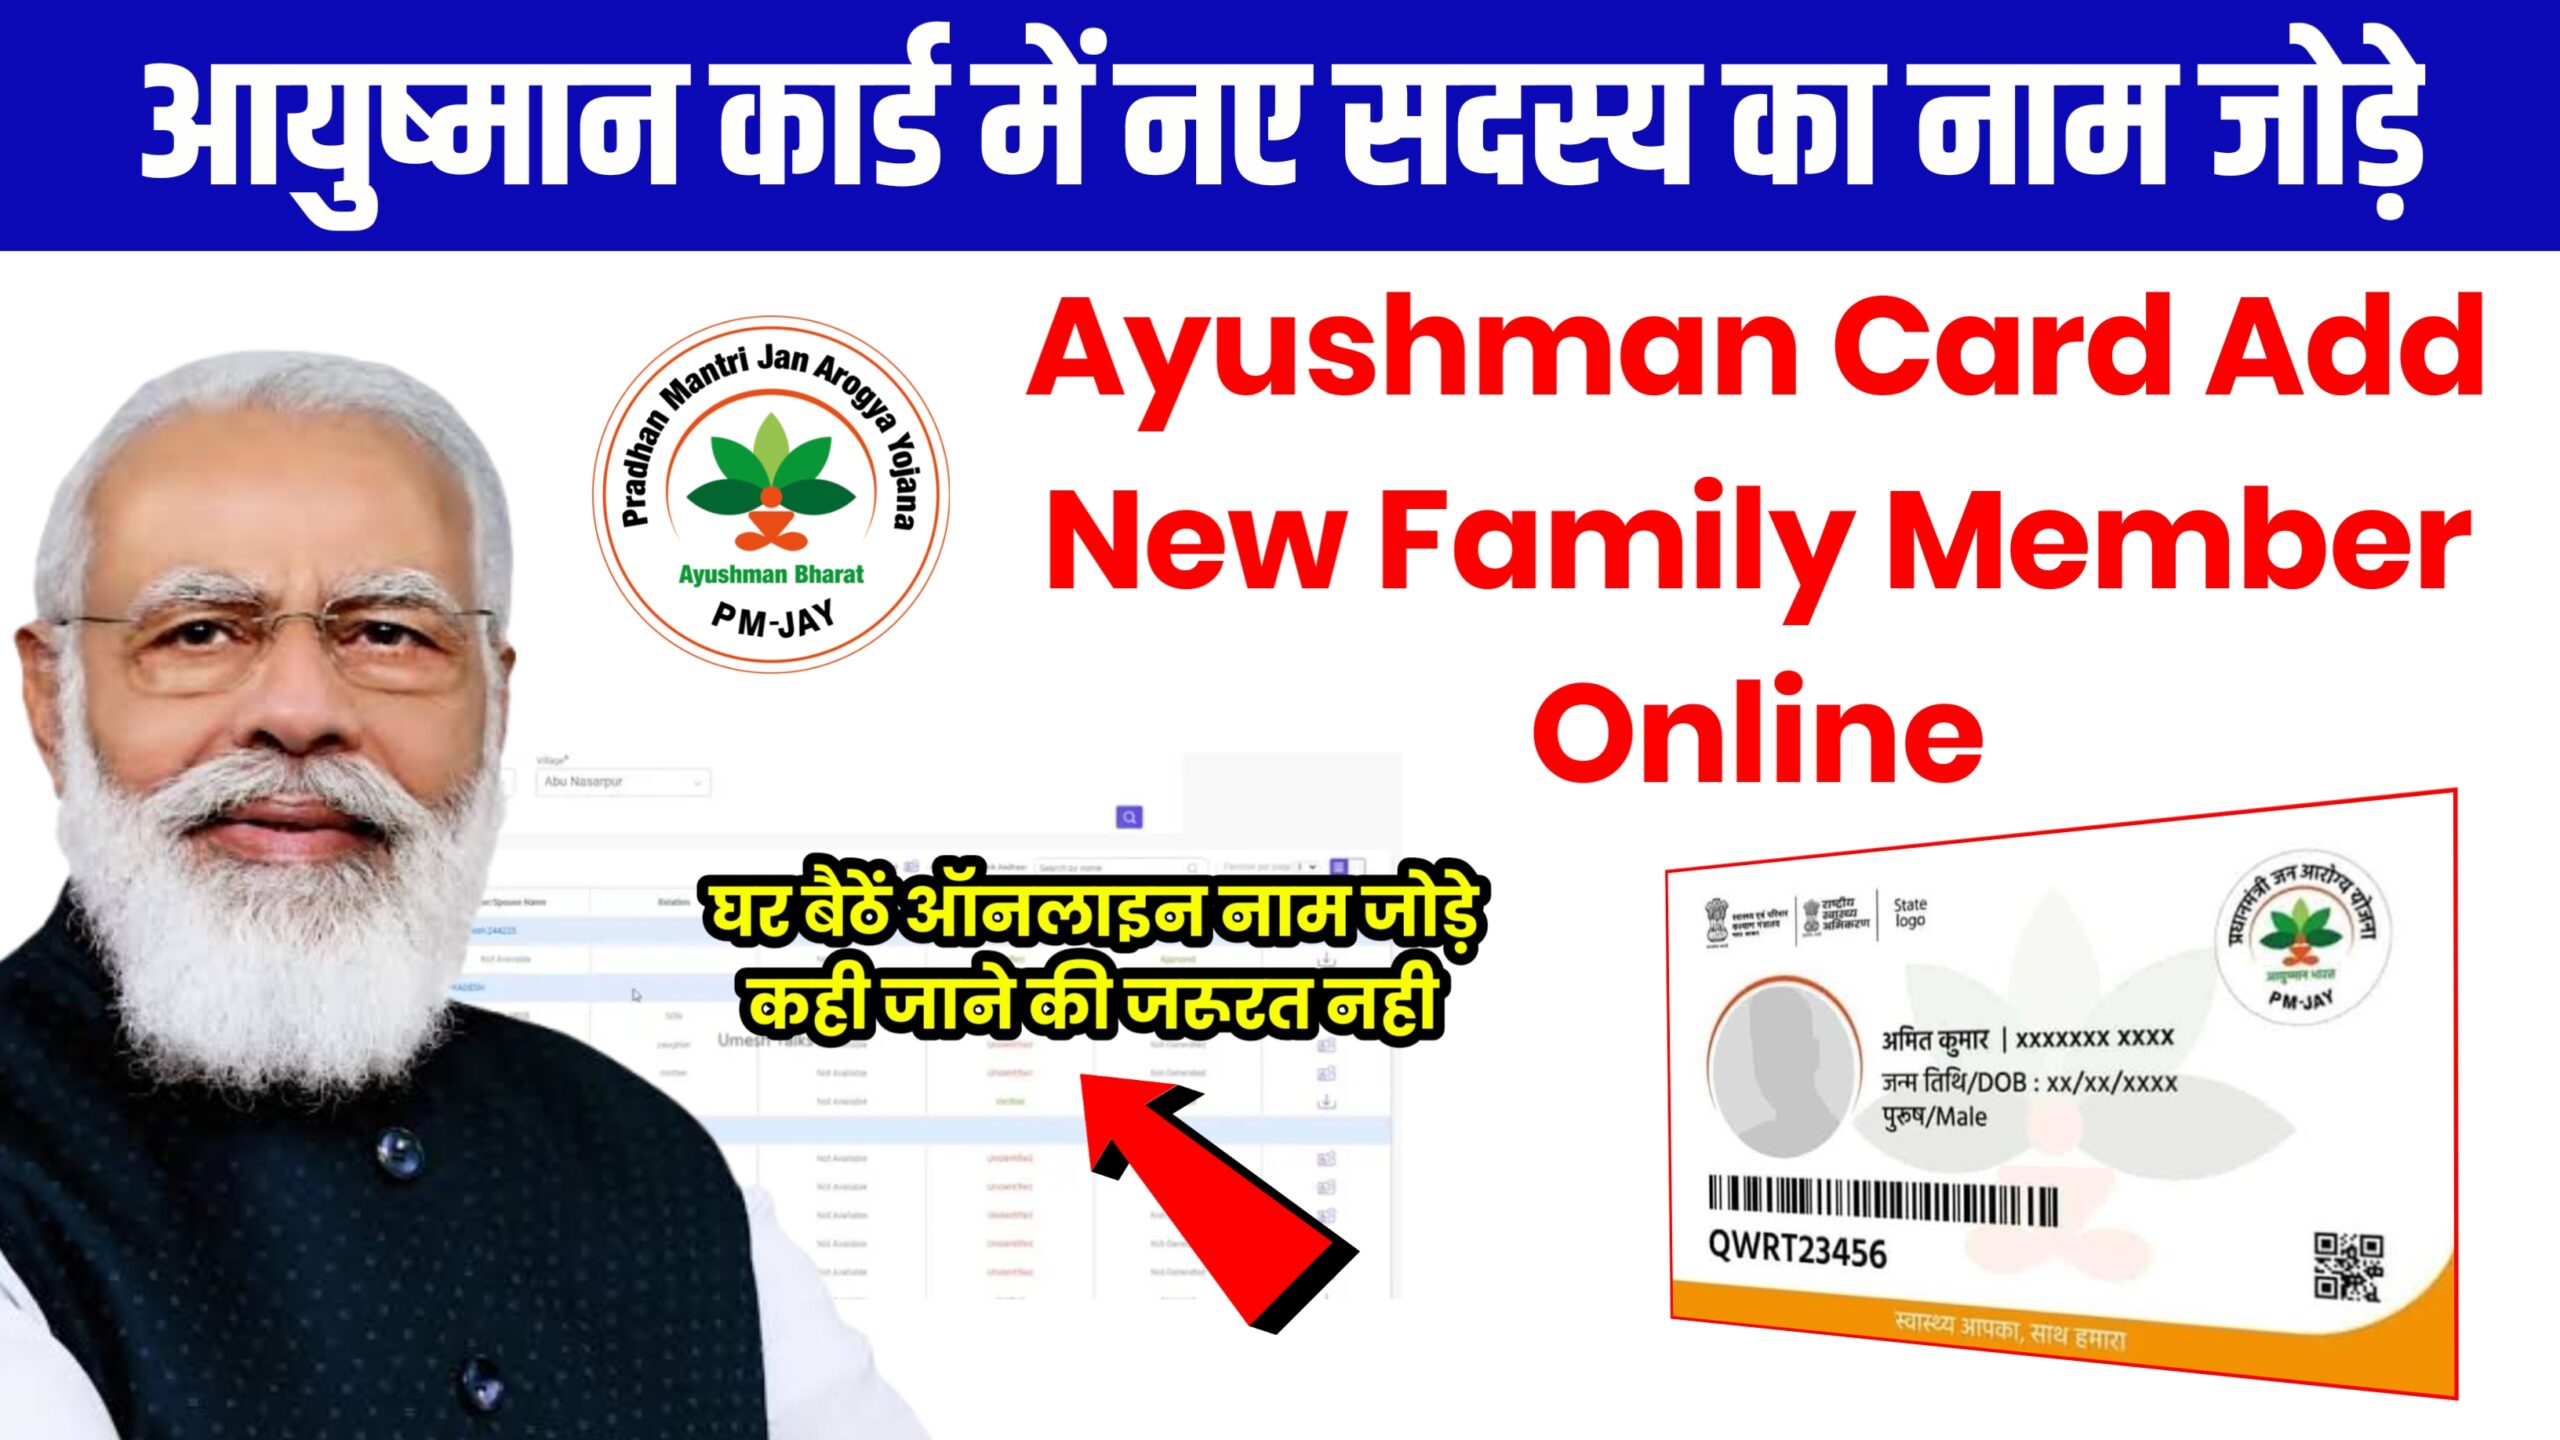 Ayushman Card Add Member Online